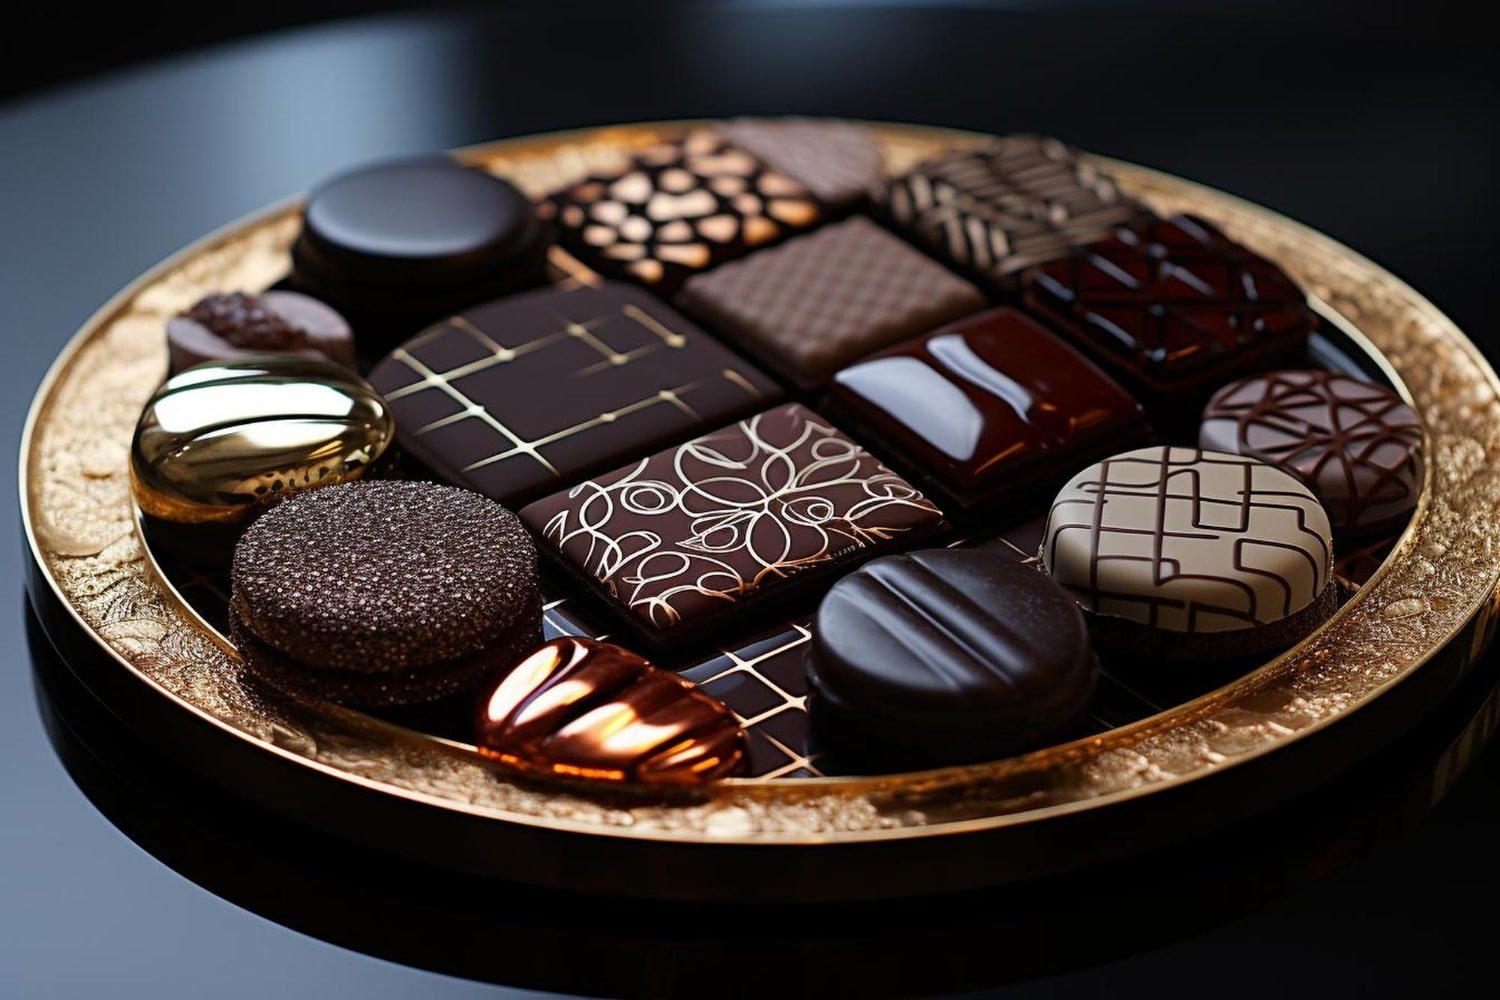 Indulge In Gourmet Chocolates With Hotel Chocolat US’s Luxury Chocolate Range